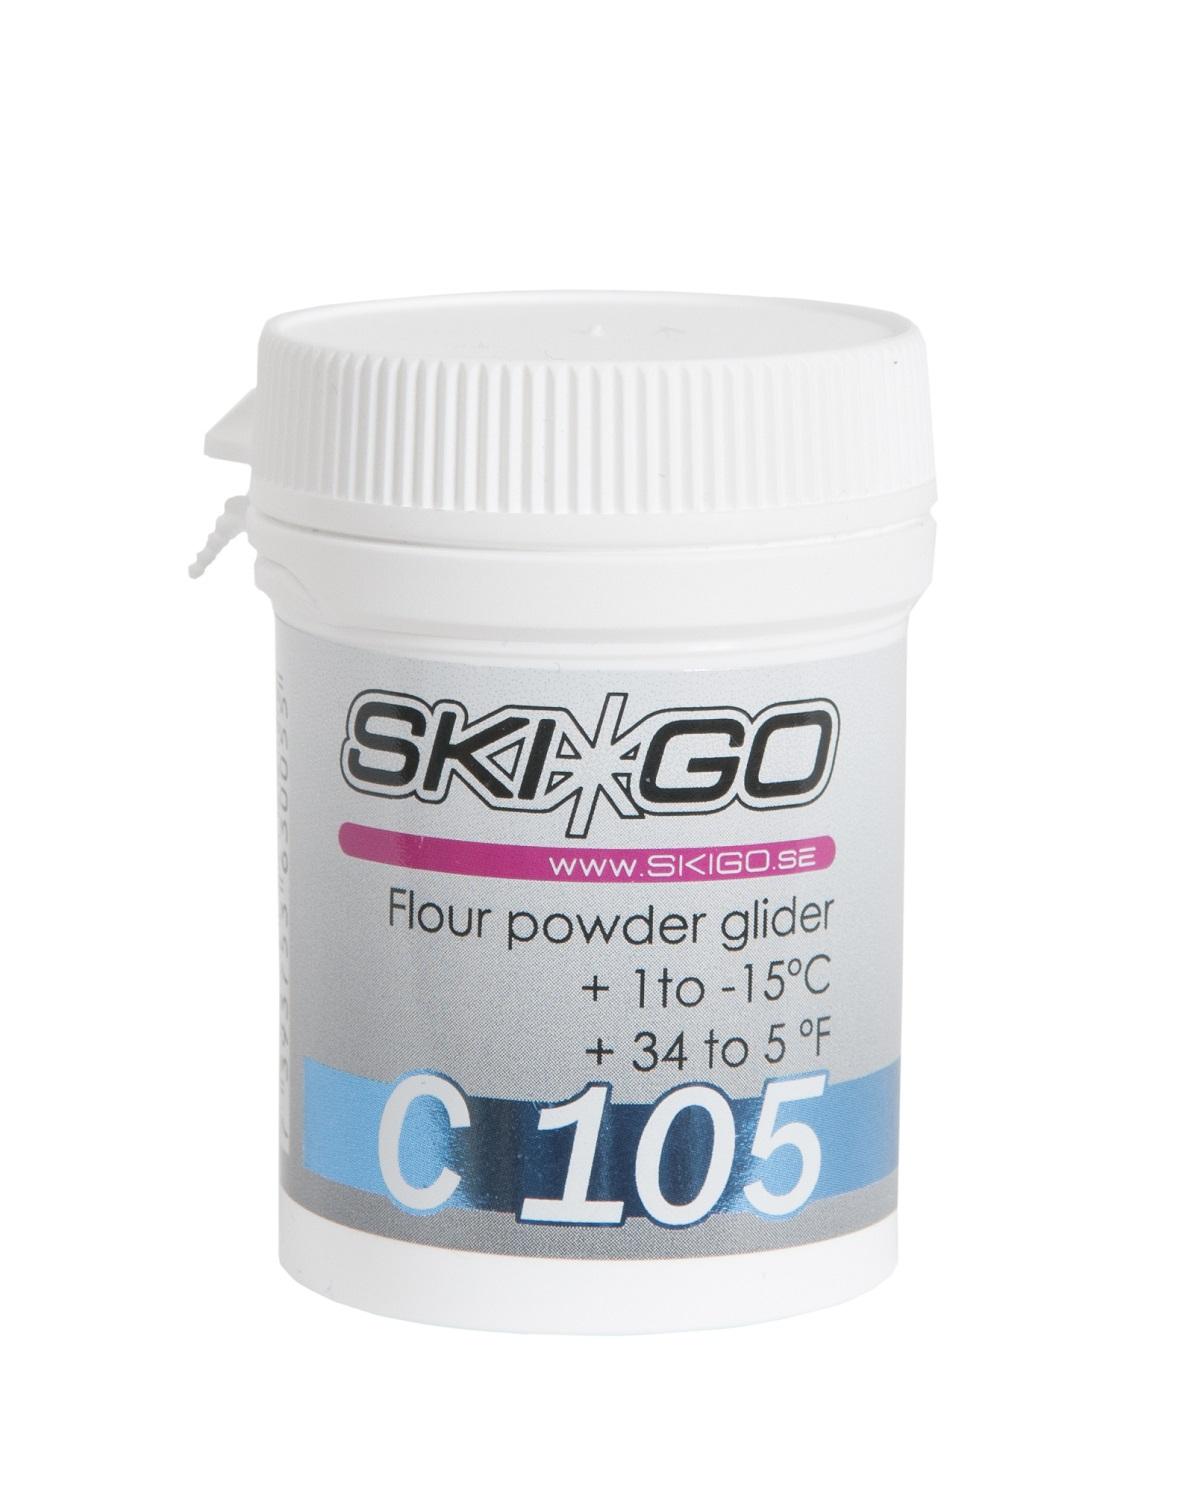 Skigo C105 Flour Powder Glider 30g